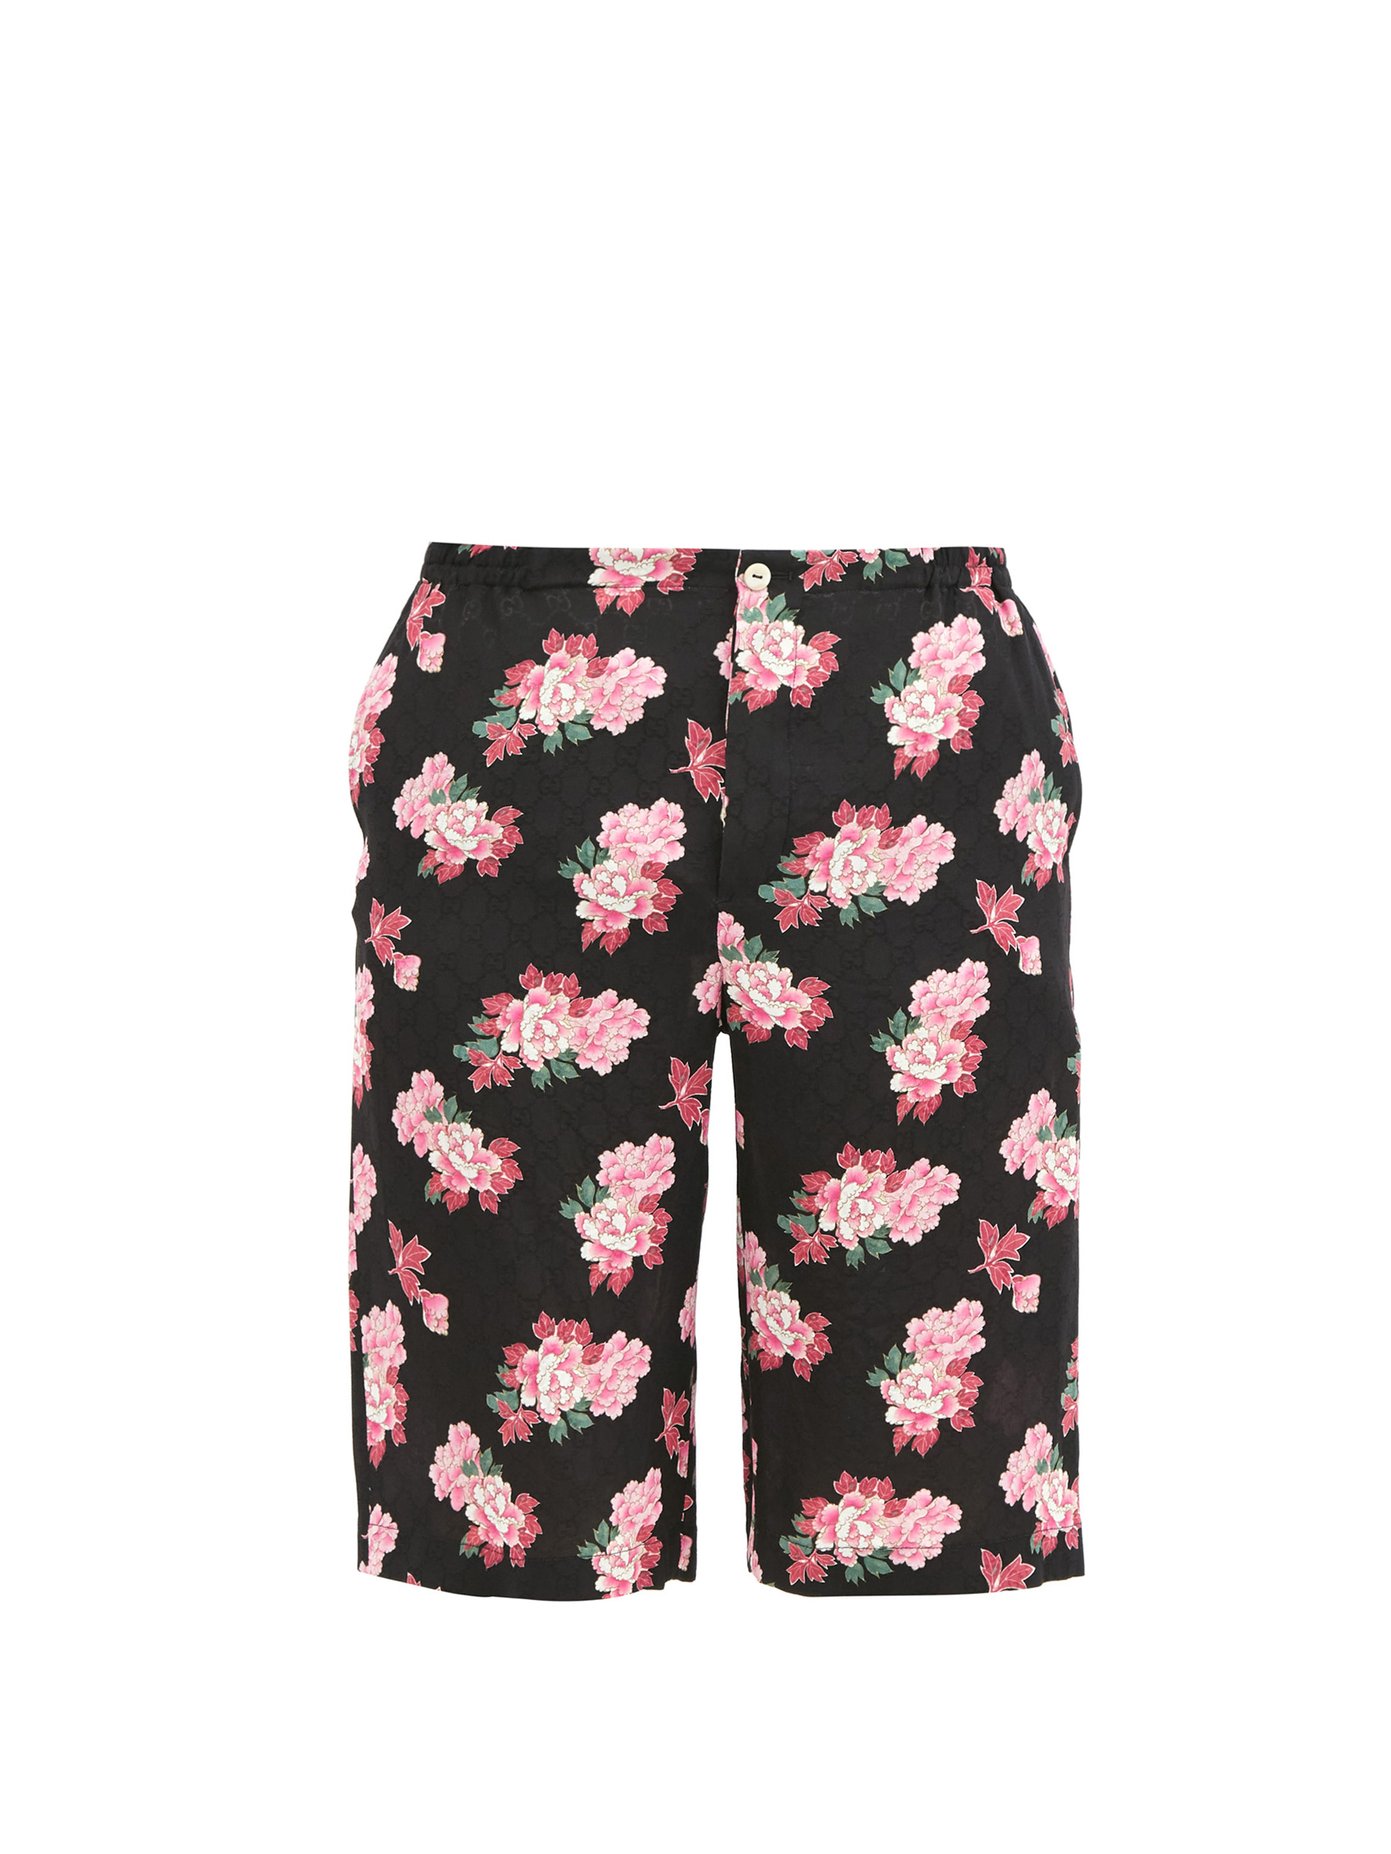 gucci floral shorts